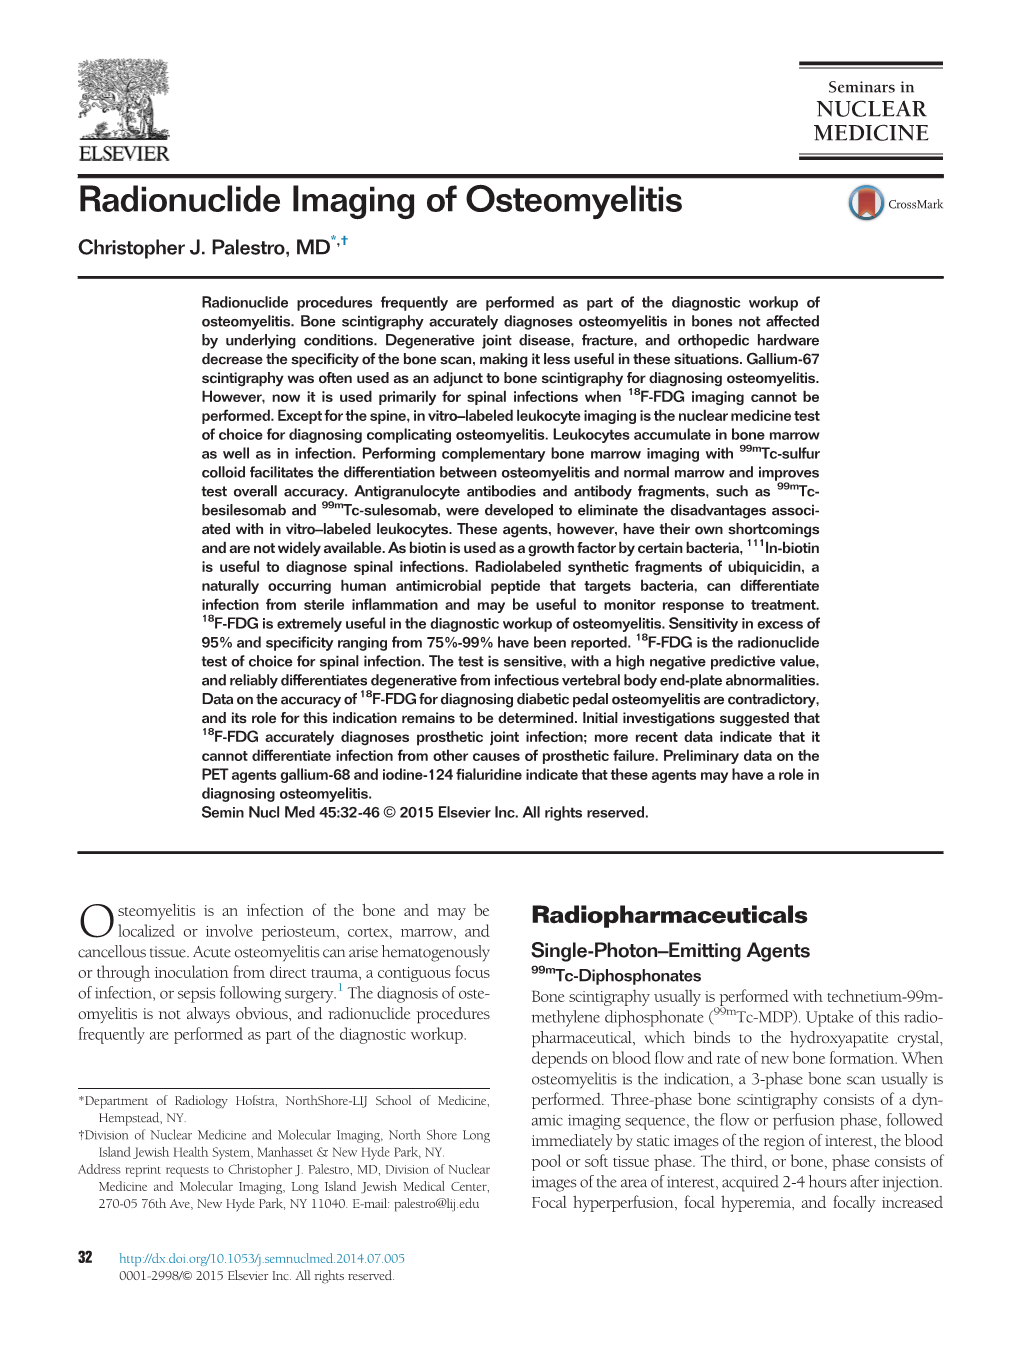 Radionuclide Imaging of Osteomyelitis Christopher J